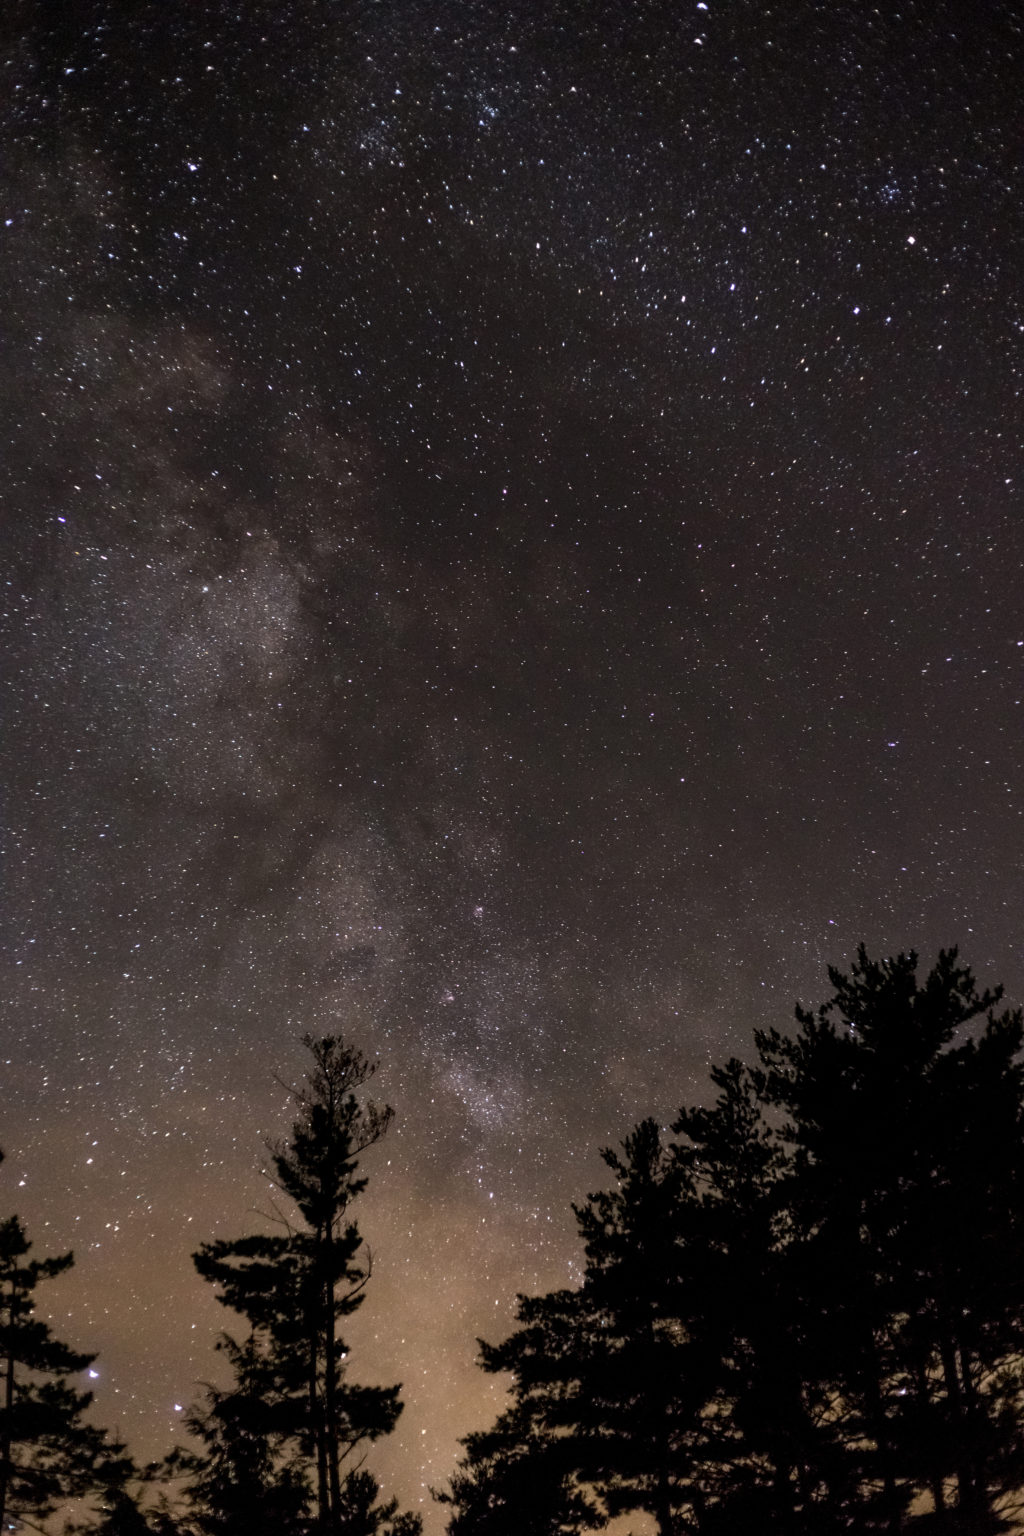 Dark Pine Tree Silhouettes Against Milky Way